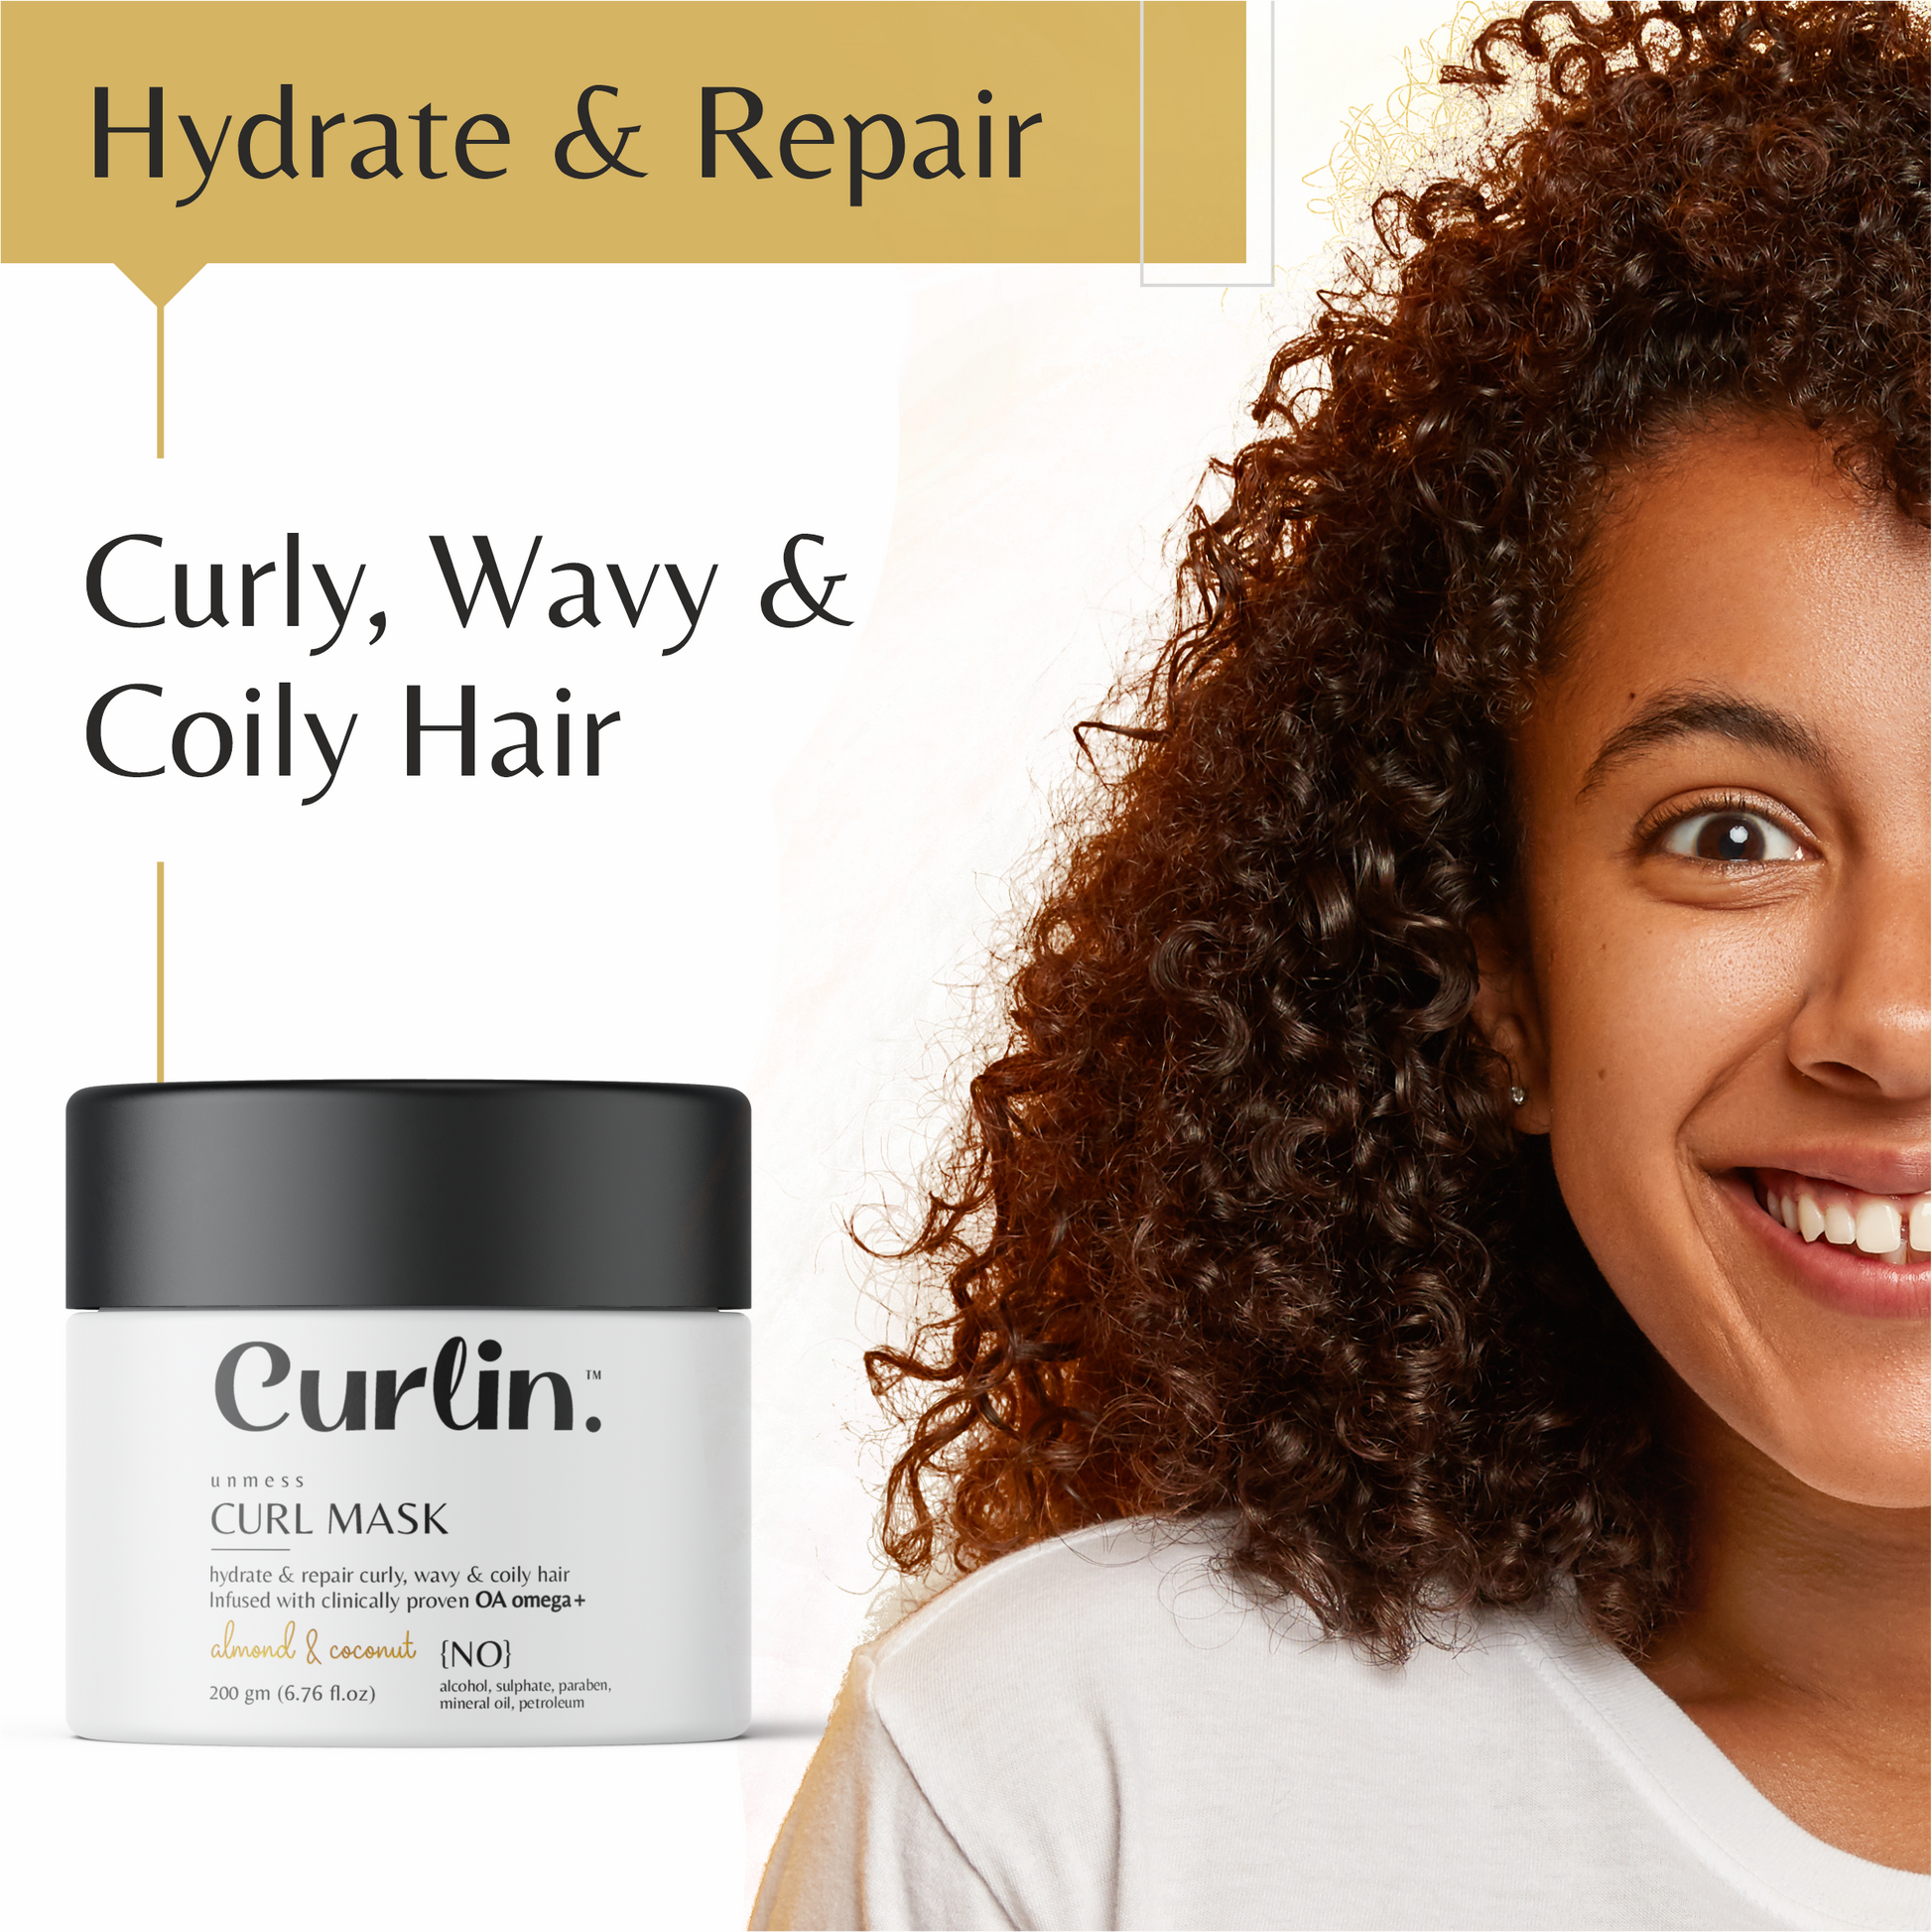 moistrure for curly hair